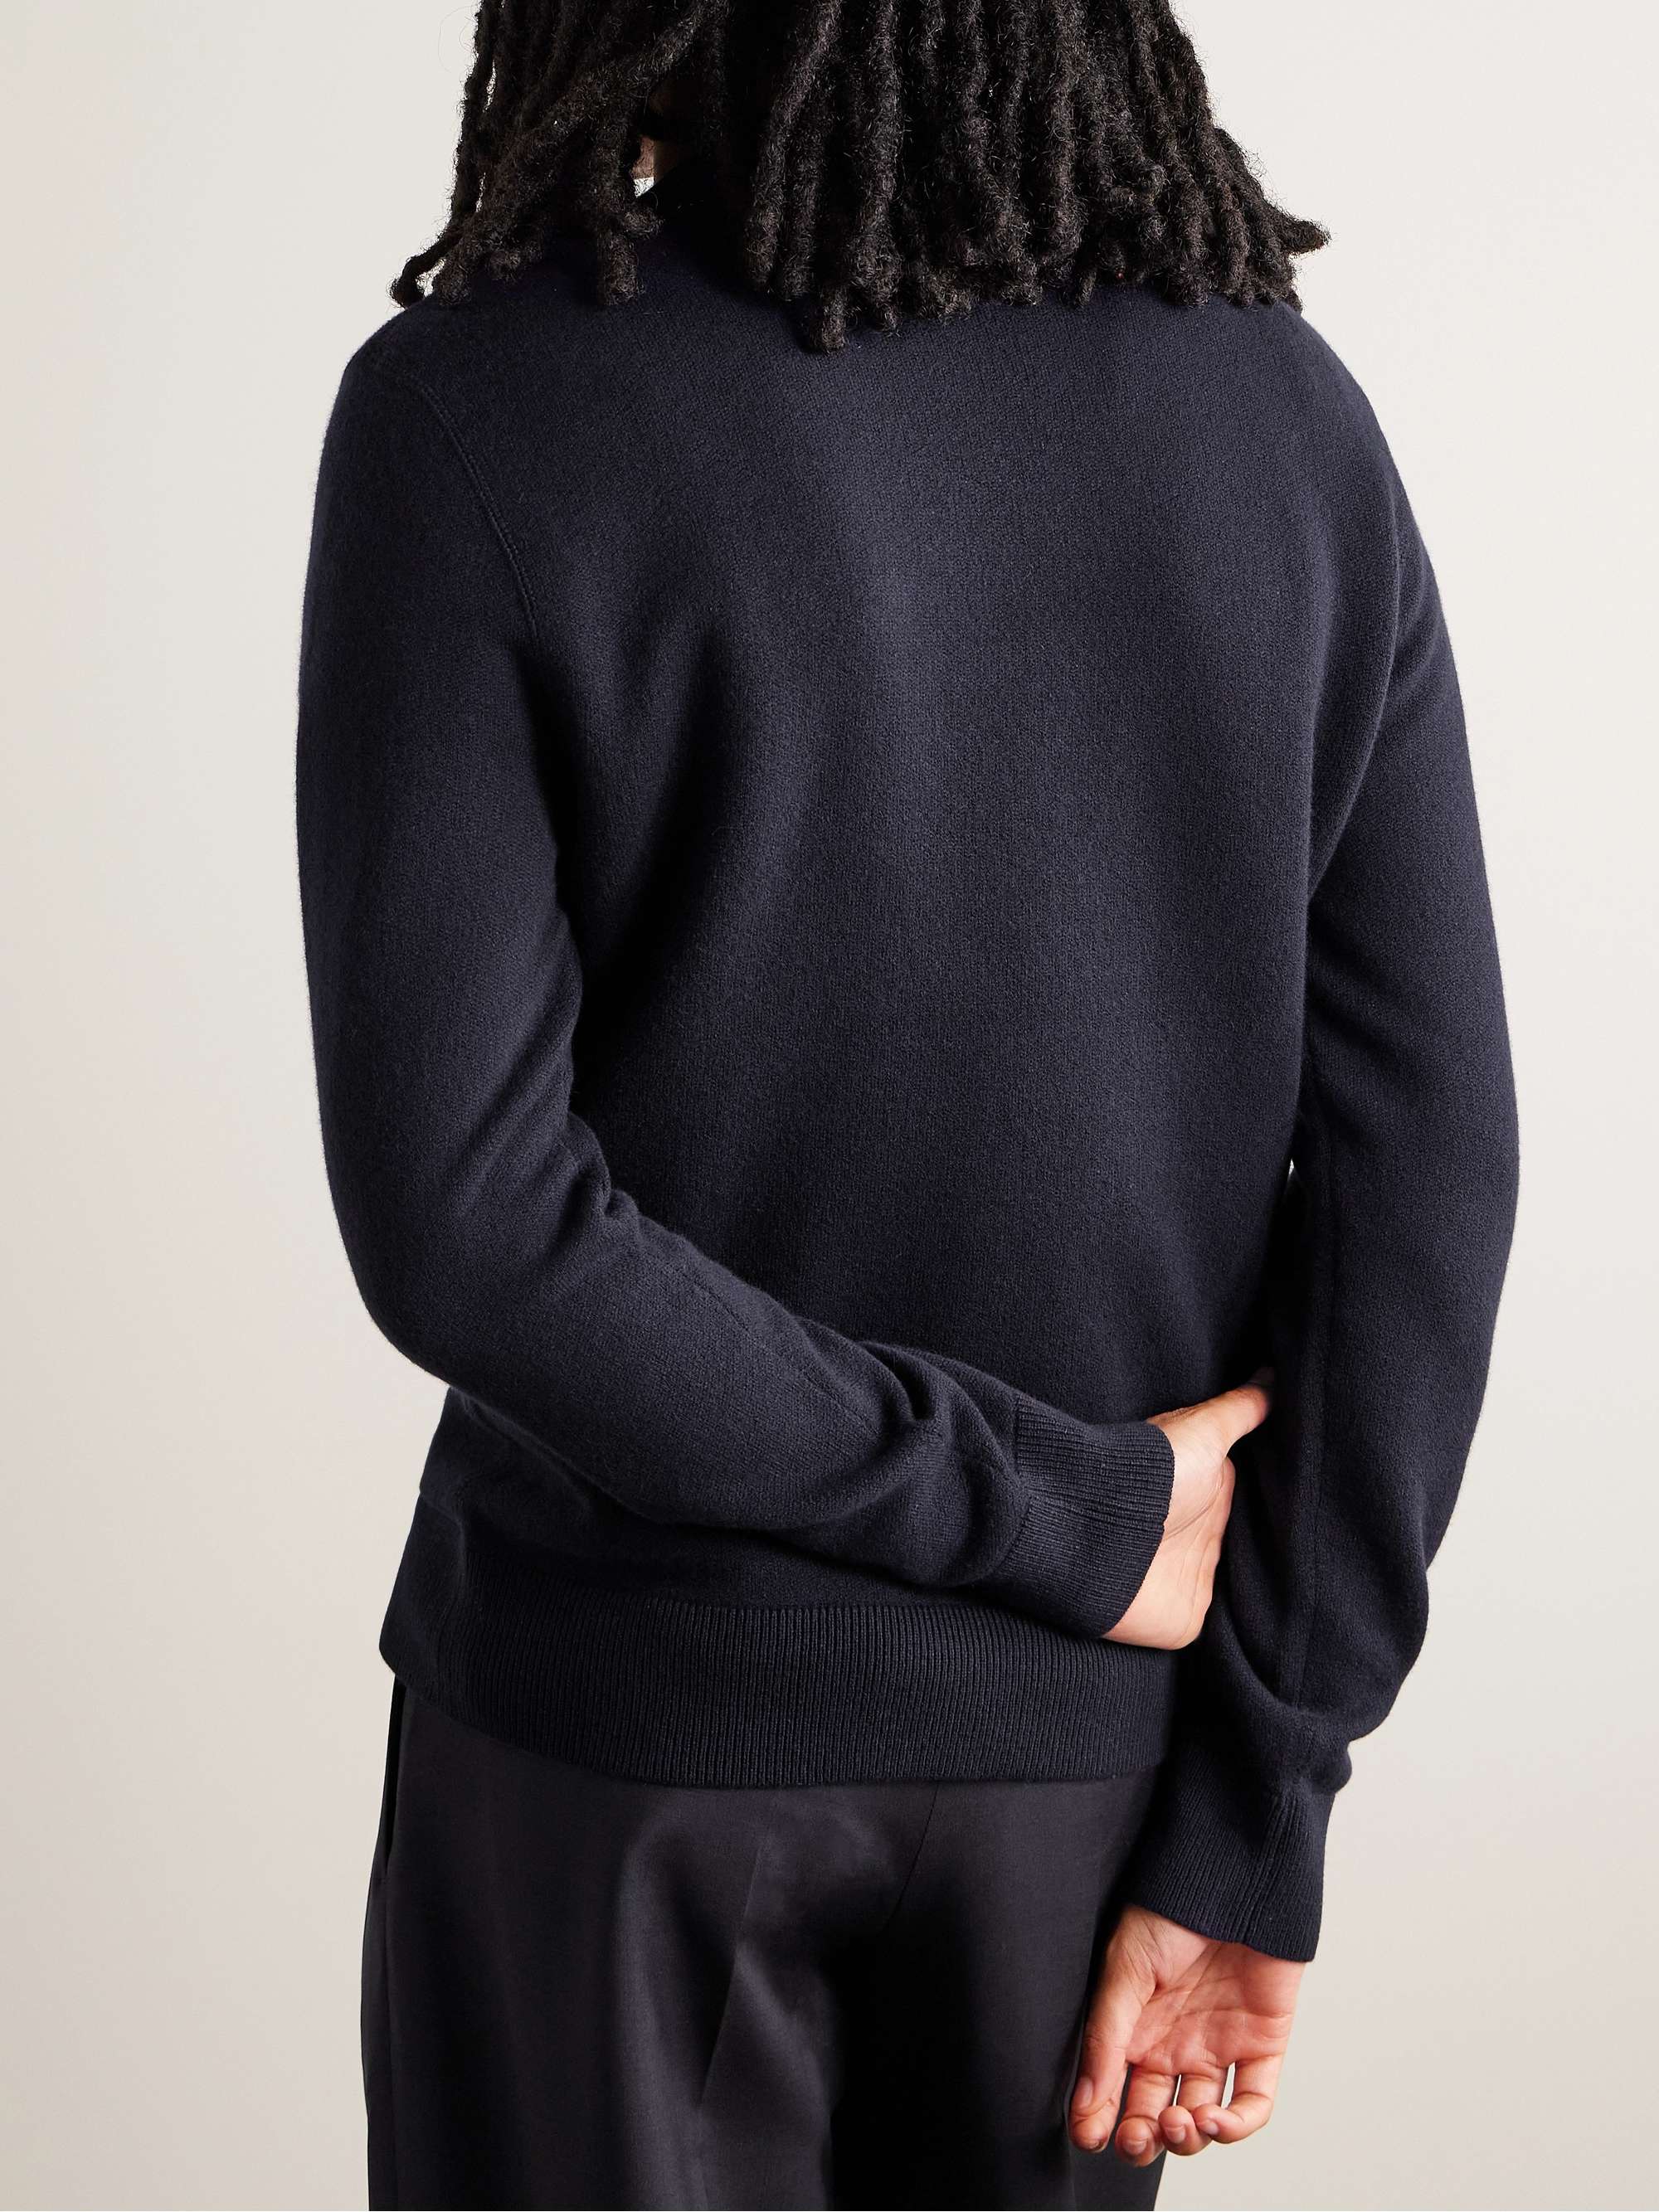 DUNHILL Slim-Fit Cashmere Sweater for Men | MR PORTER